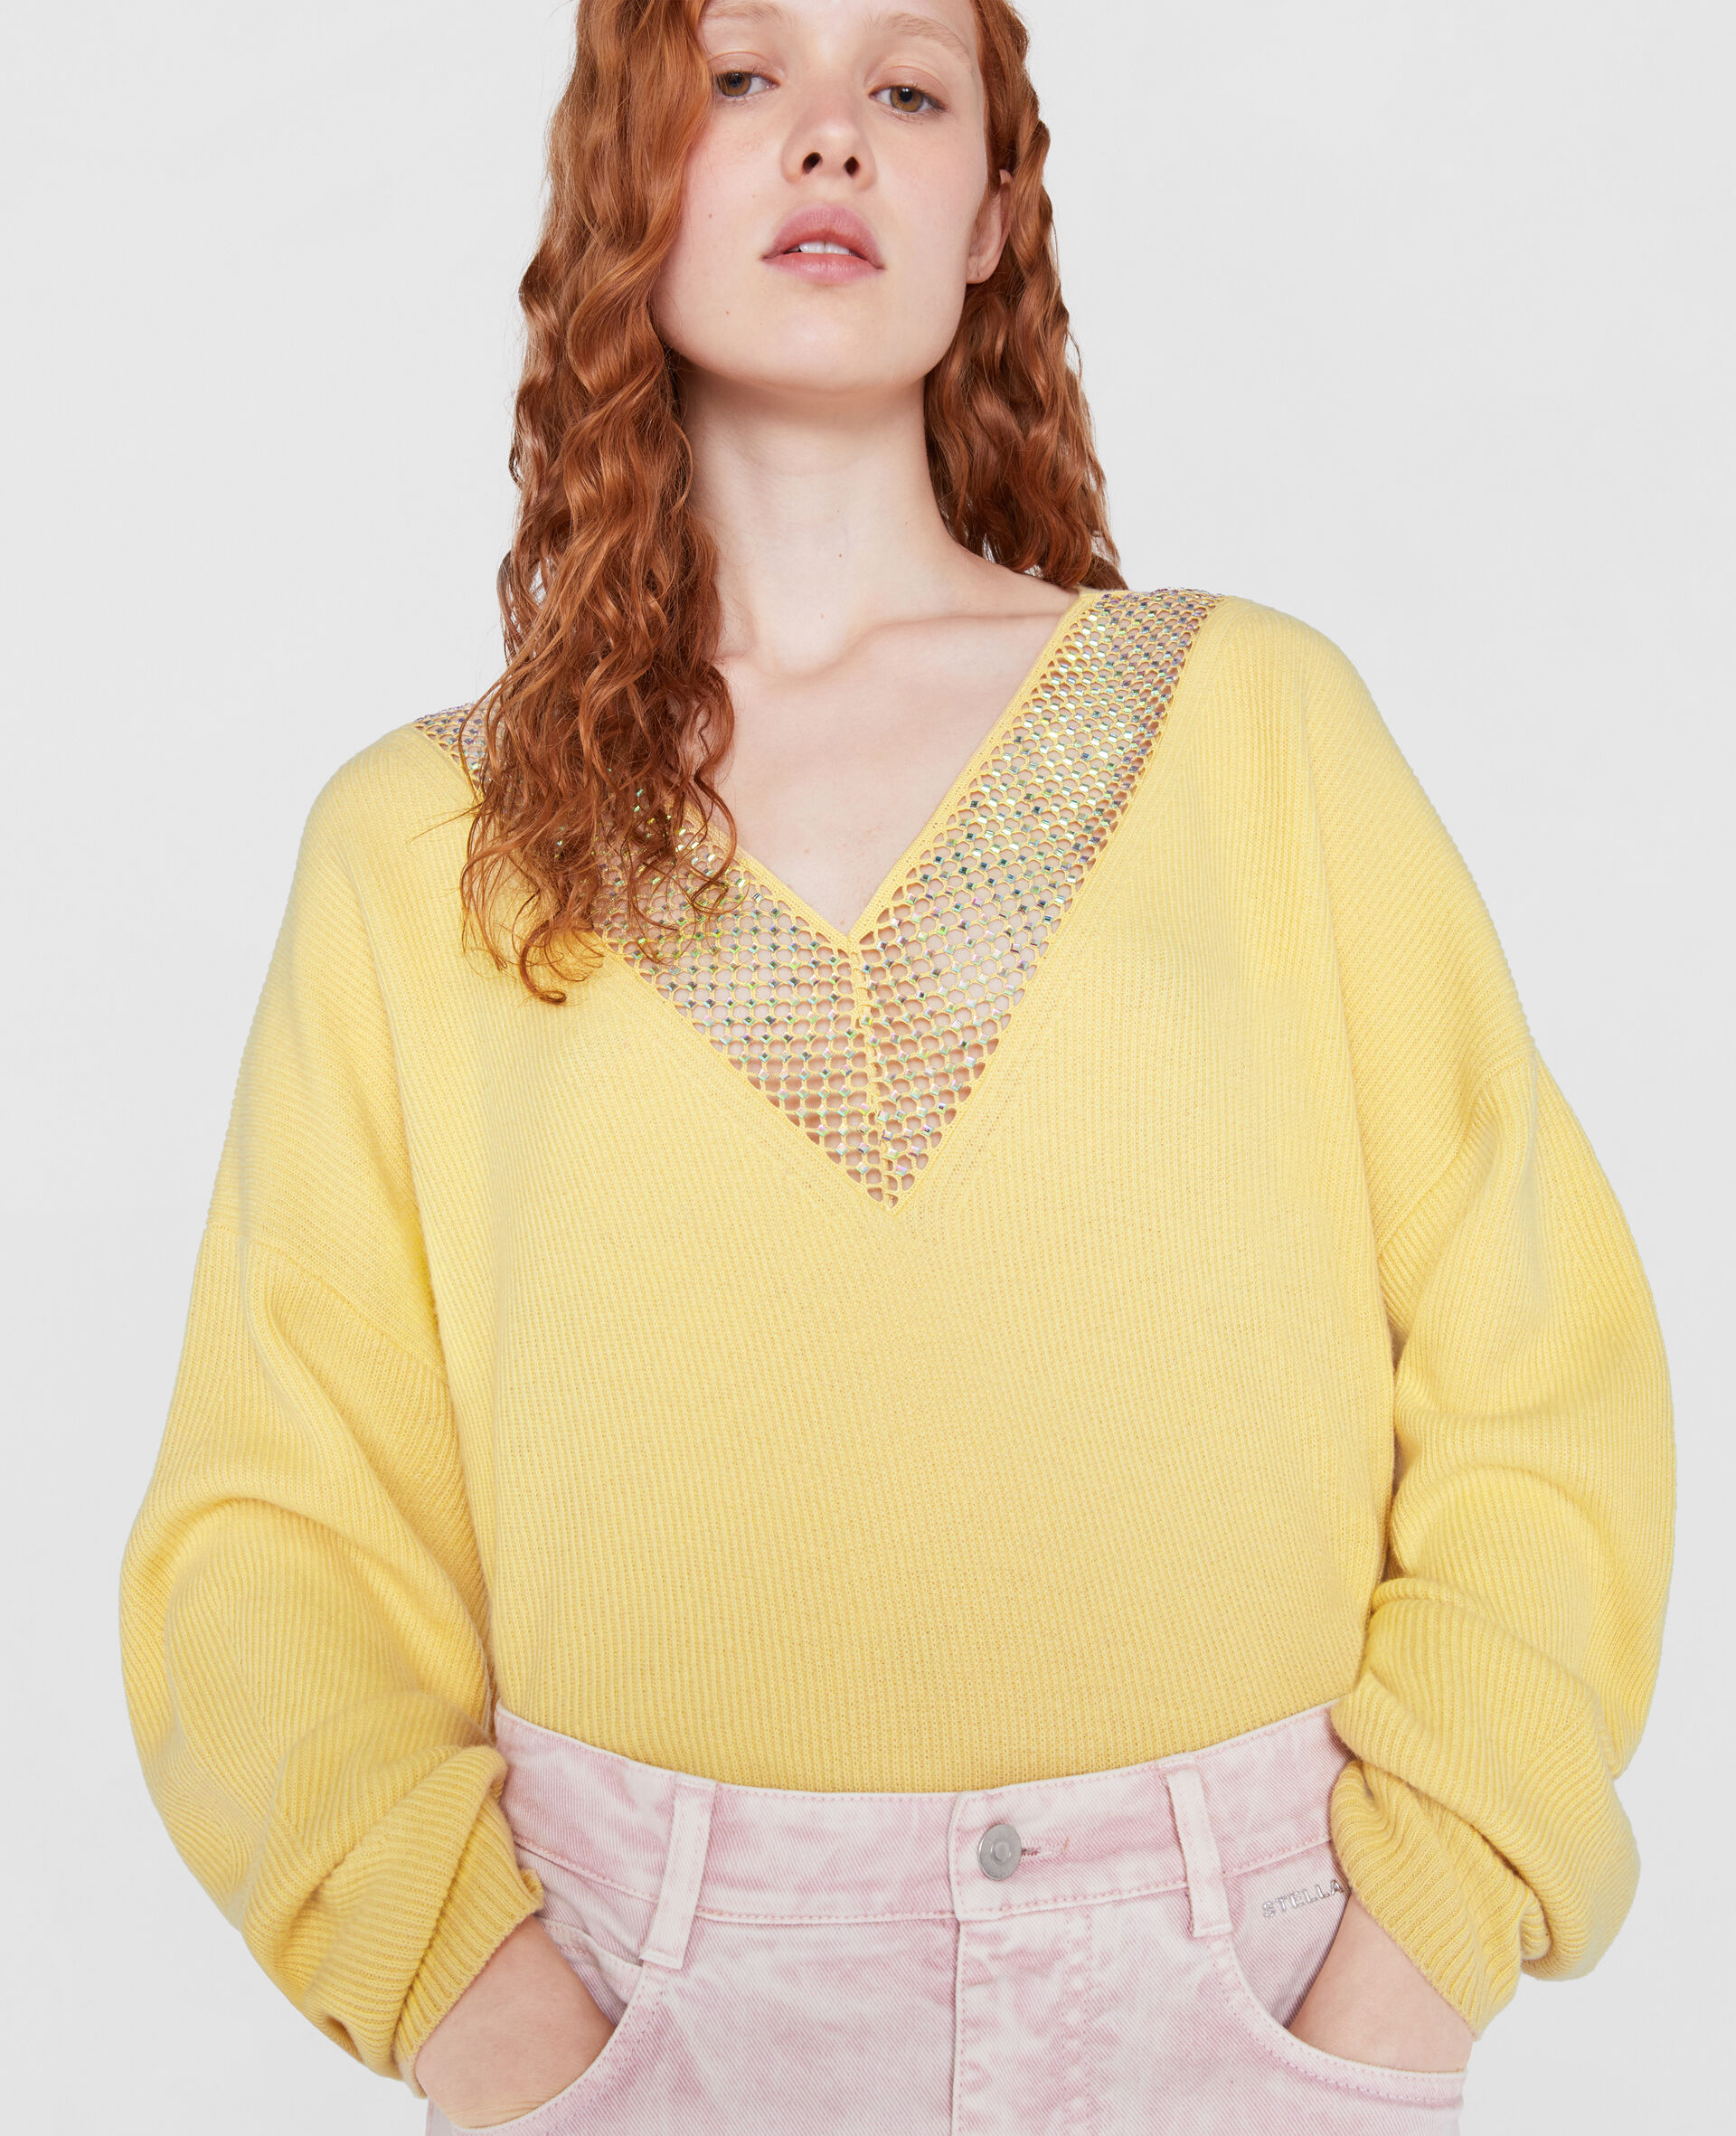 Diamond Embellished Knit Sweater-Yellow-large image number 3